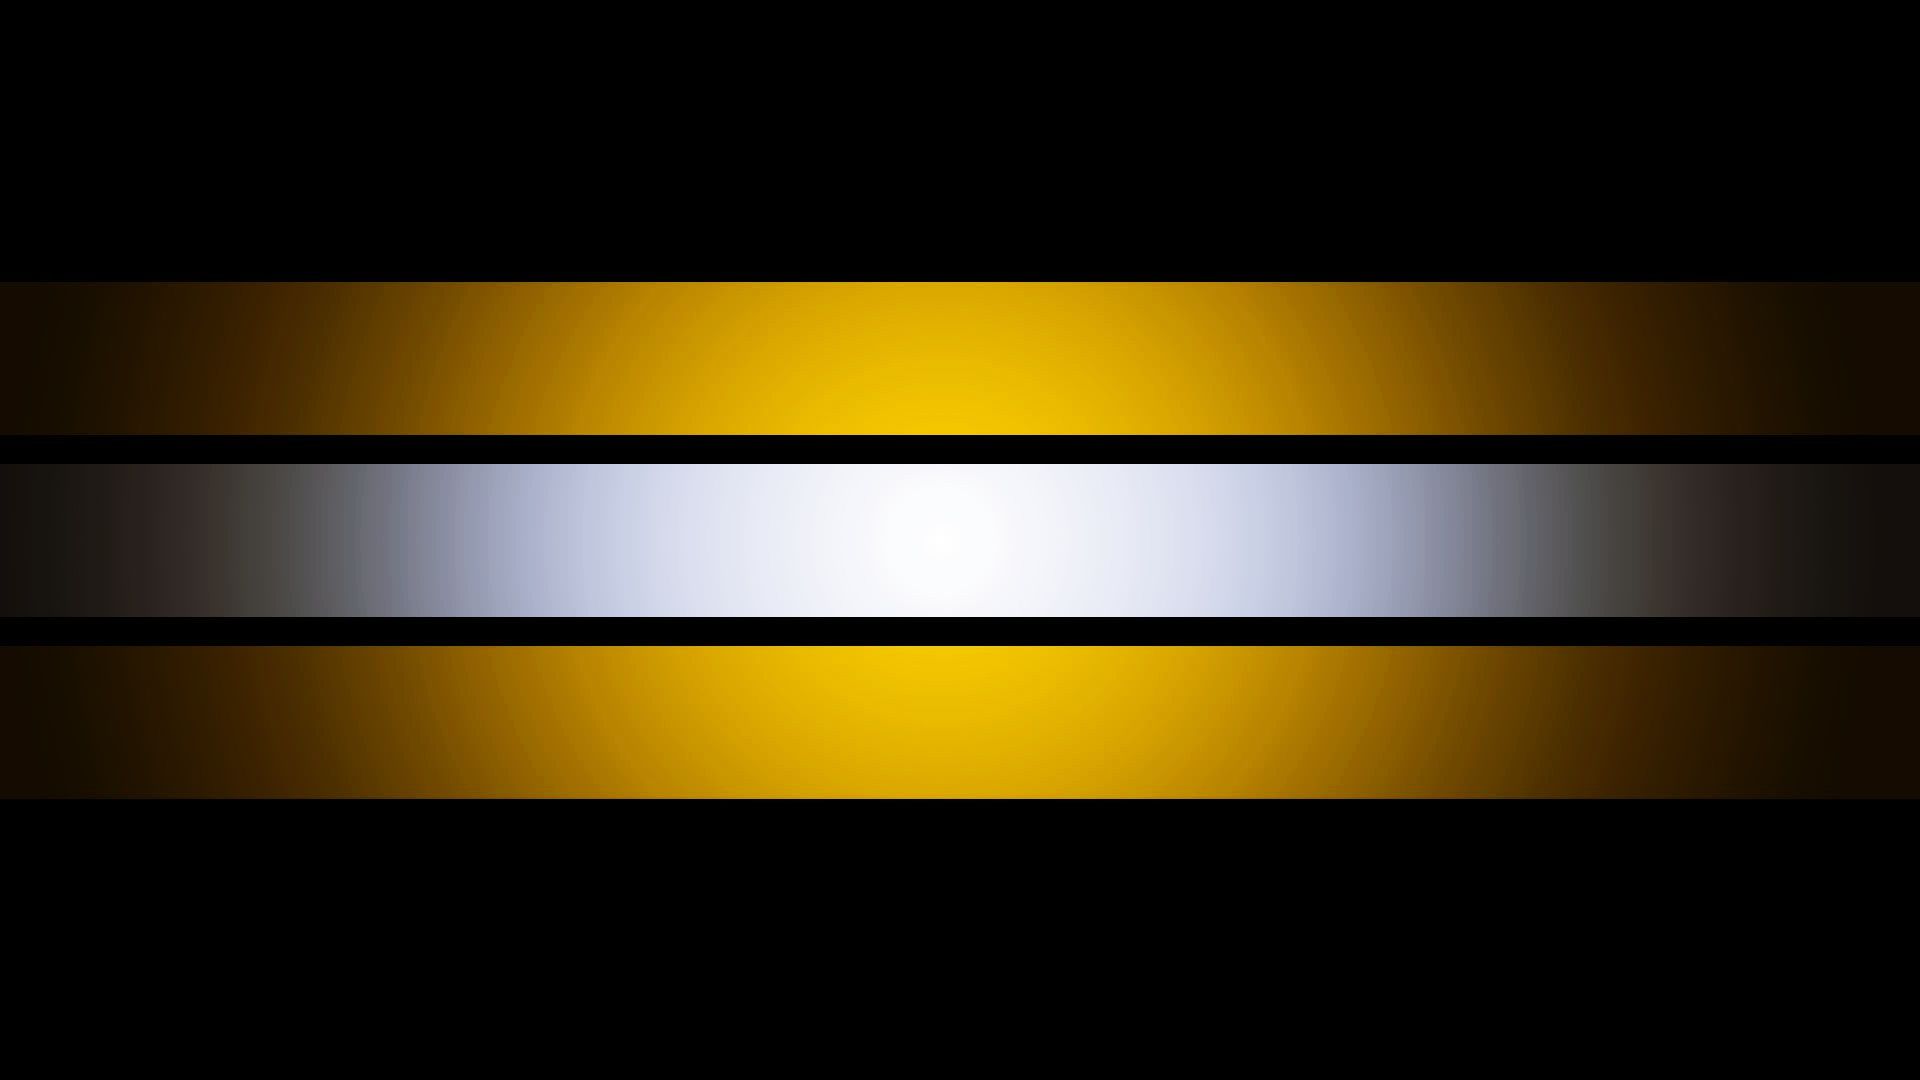 Black And Yellow Abstract HD Image Wallpaper